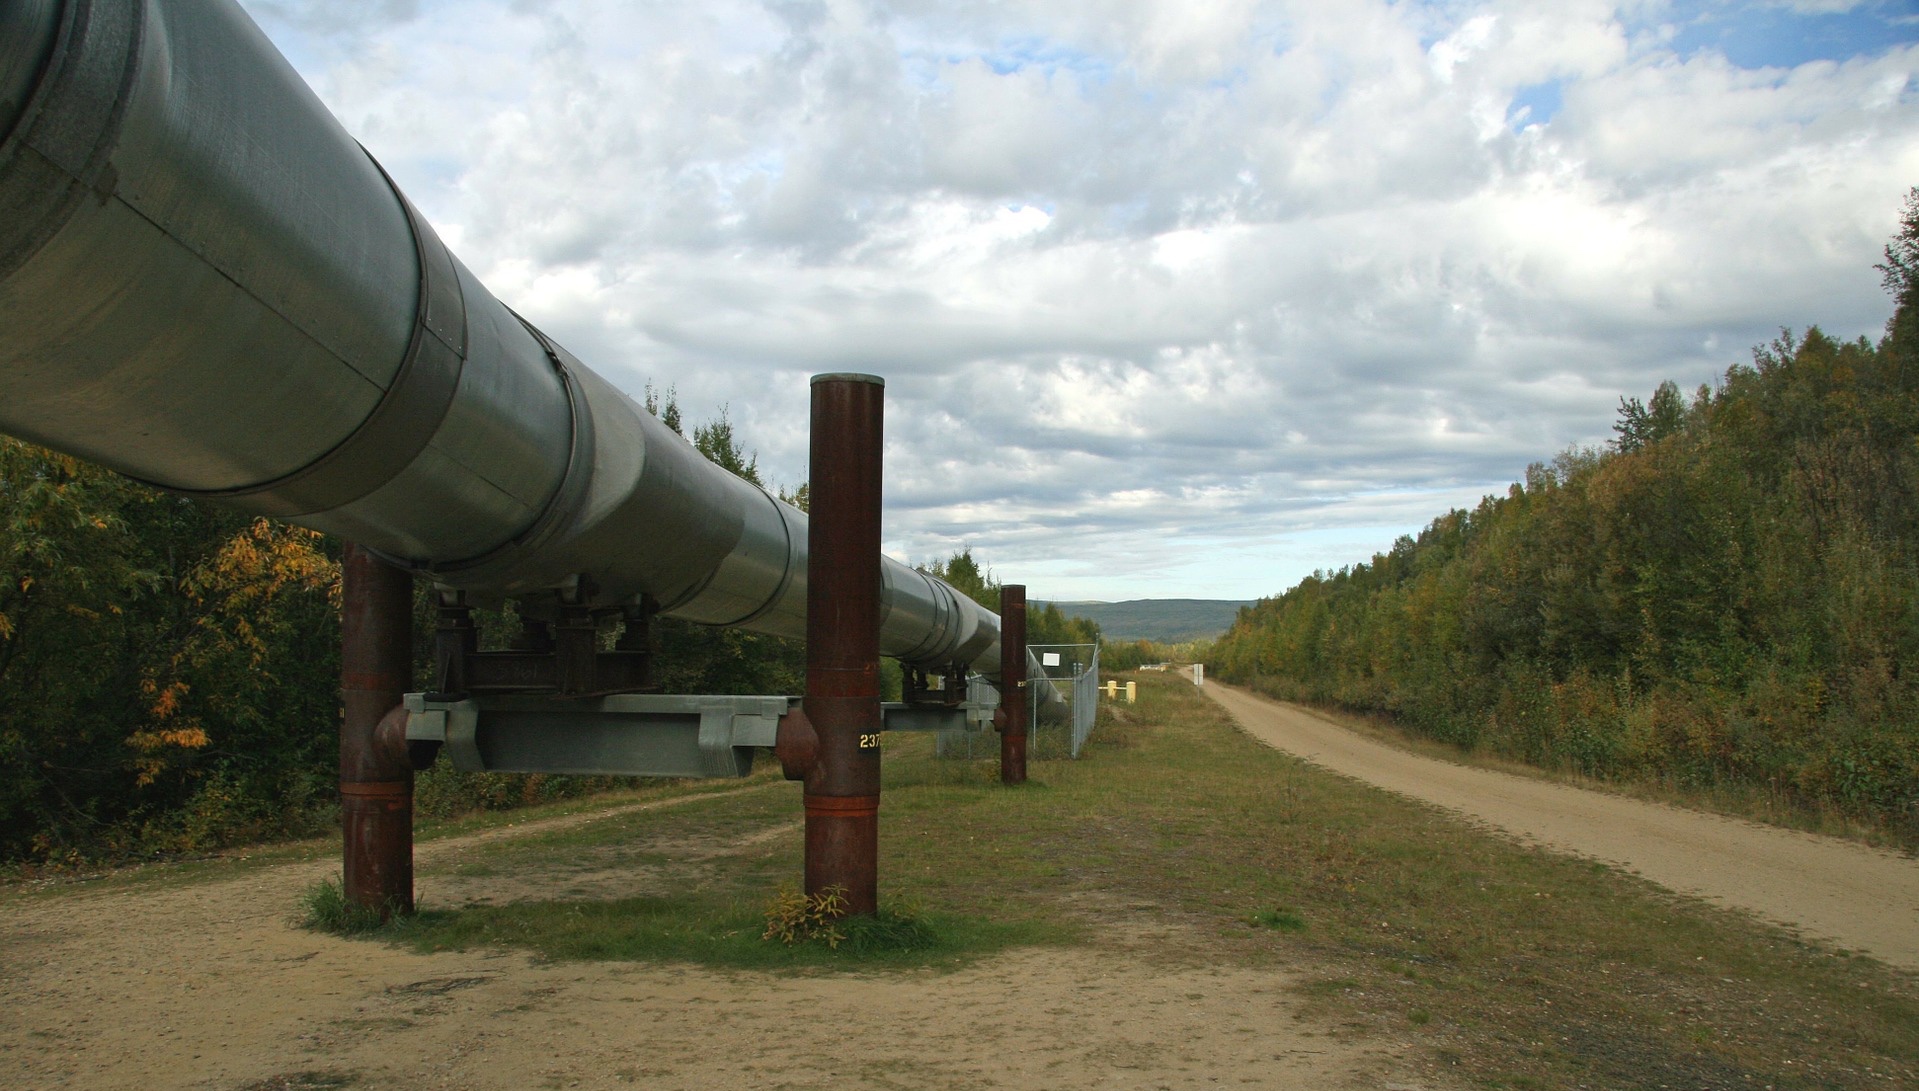 The Polish-Slovak gas interconnector will open soon